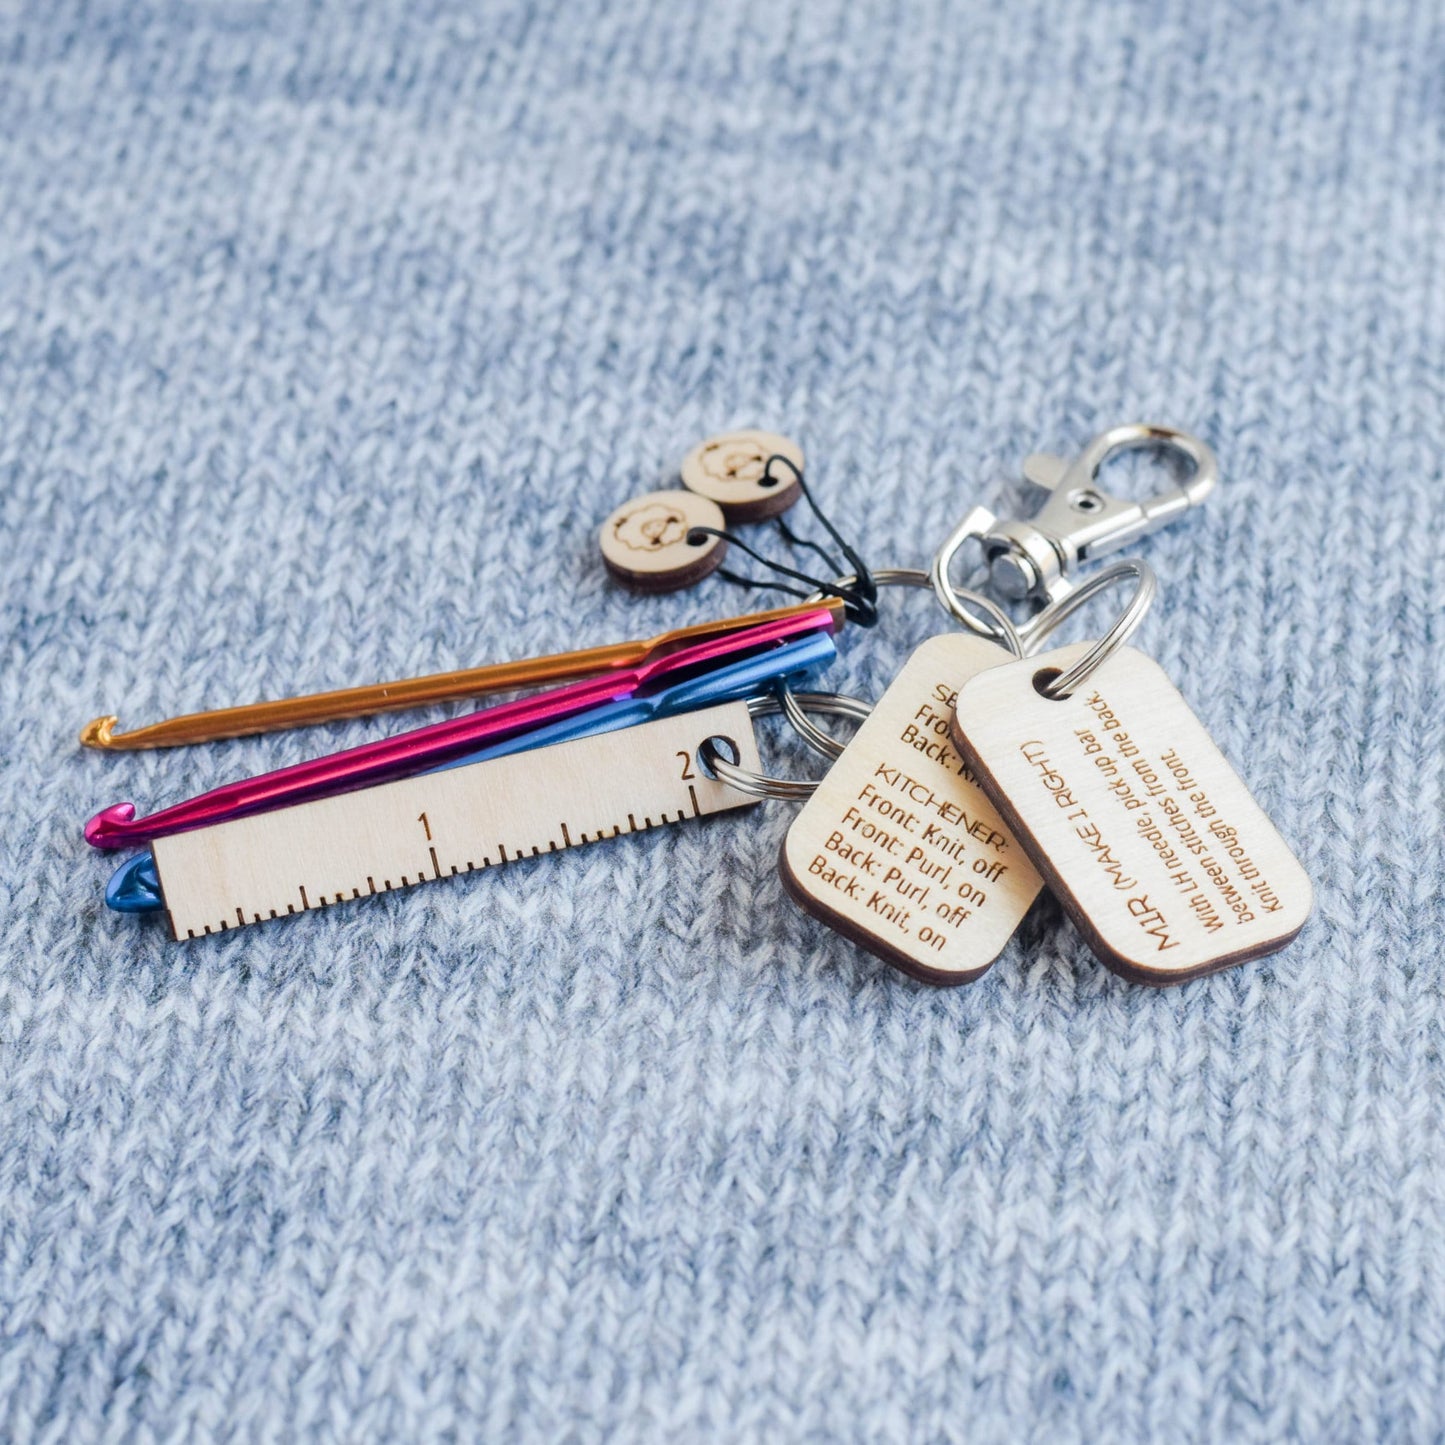 Emergency Mini Crochet Hooks with Kitchener Stitch, M1R M1L Instructions